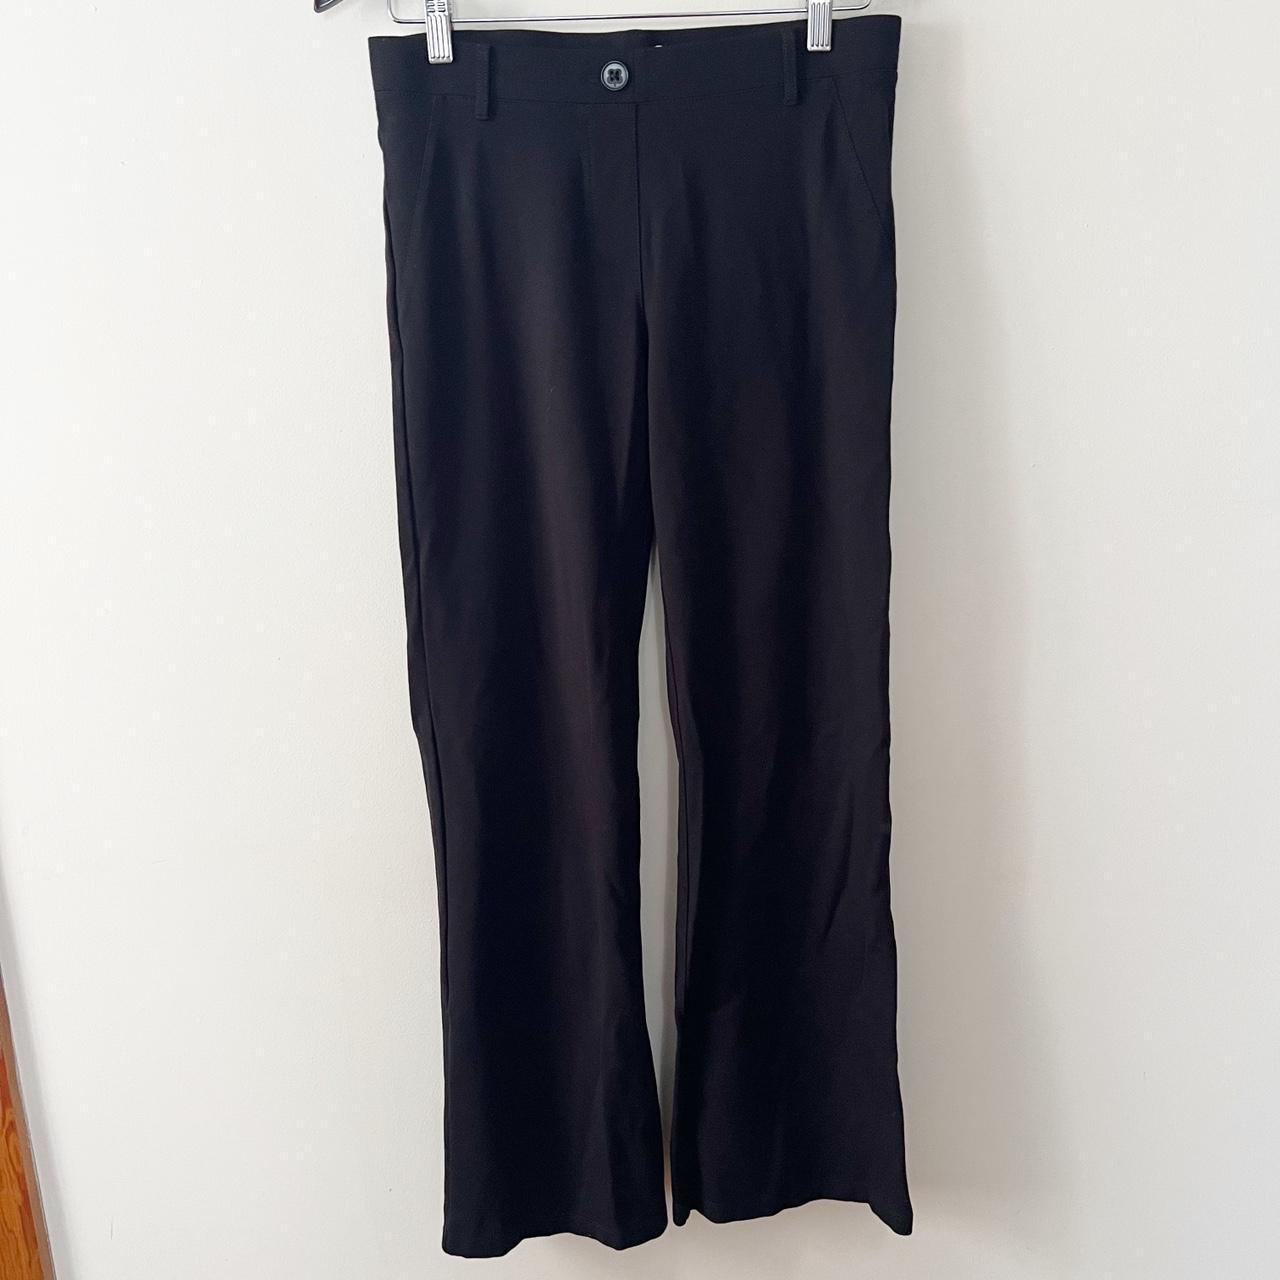 Betabrand Classic Bootcut Dress Pant Yoga Pants in - Depop